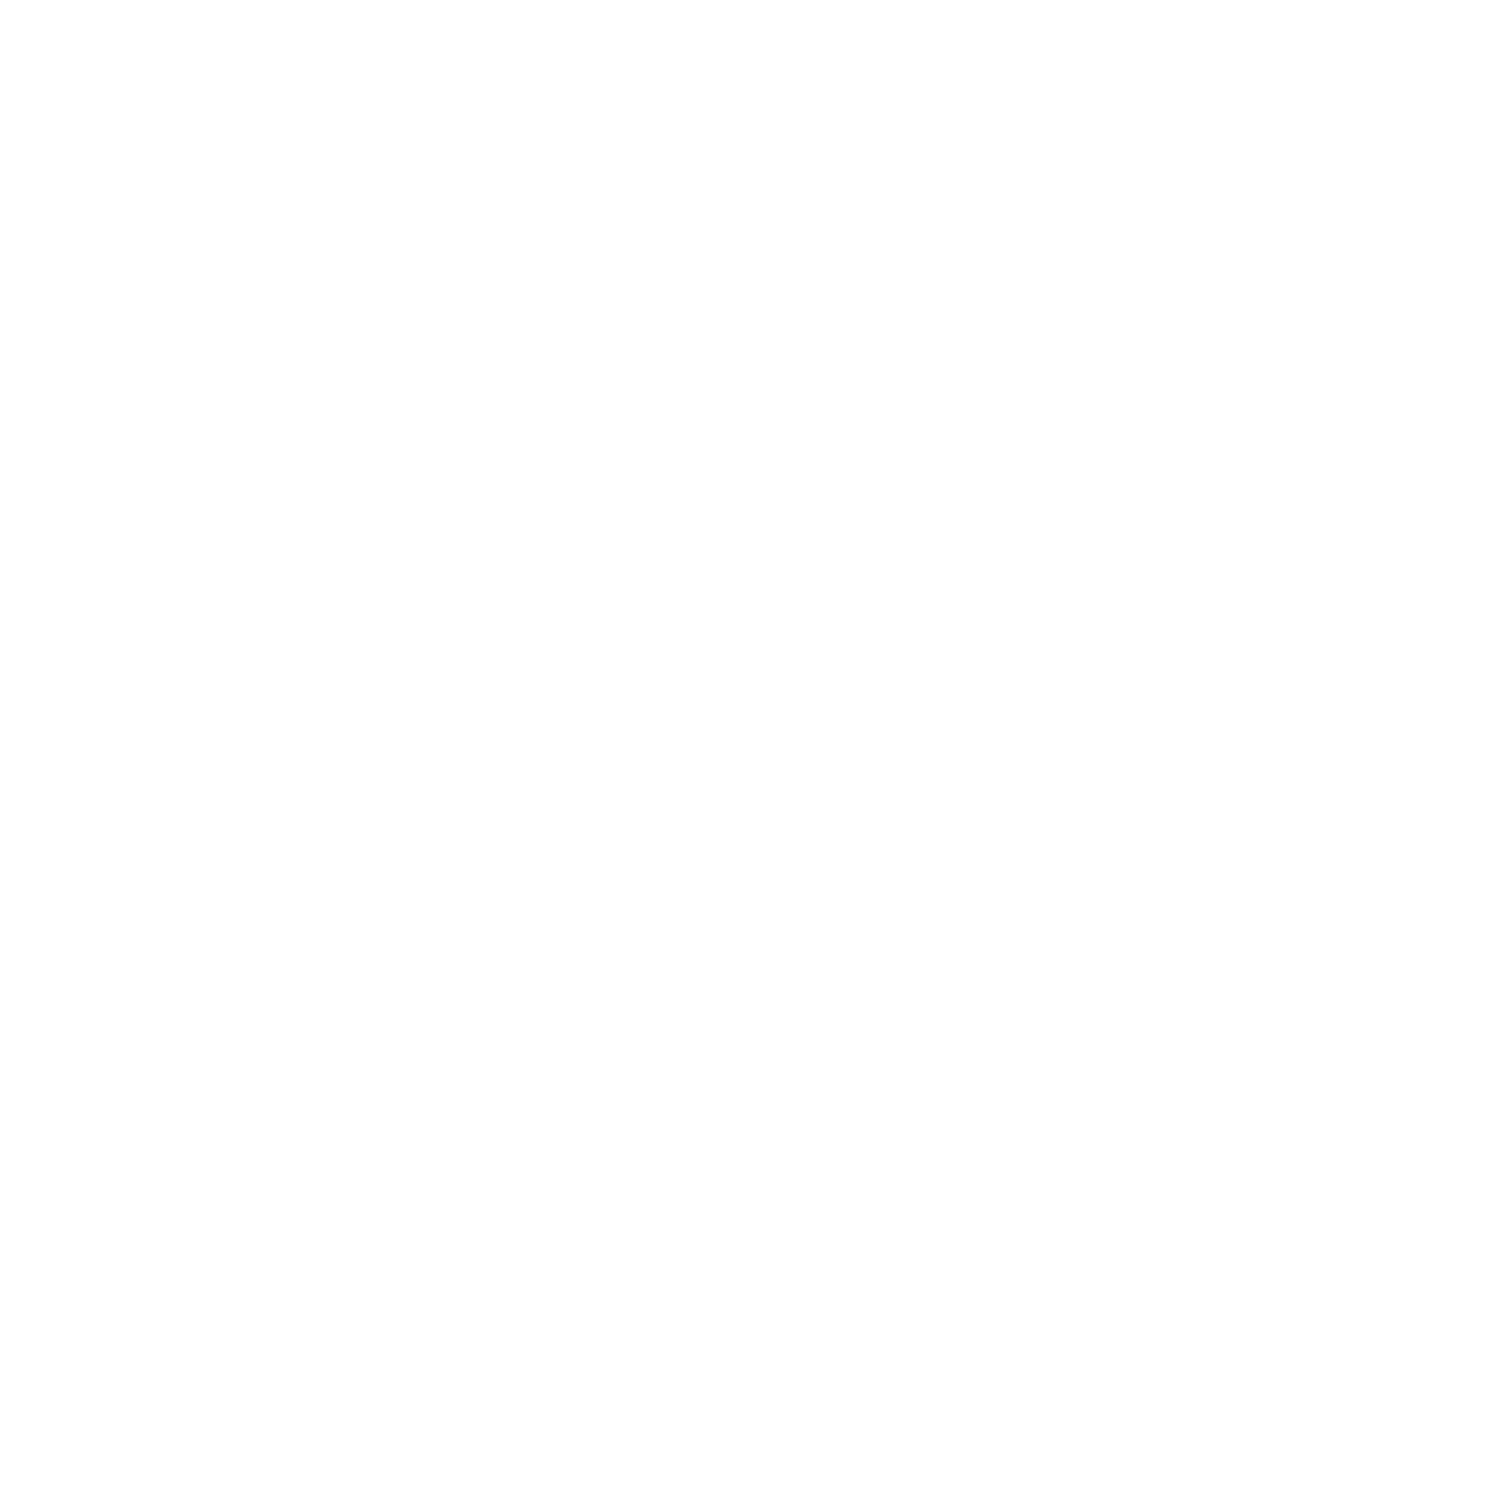 Caan Rose Estates Ltd - Slough : Letting agents in Uxbridge Greater London Hillingdon